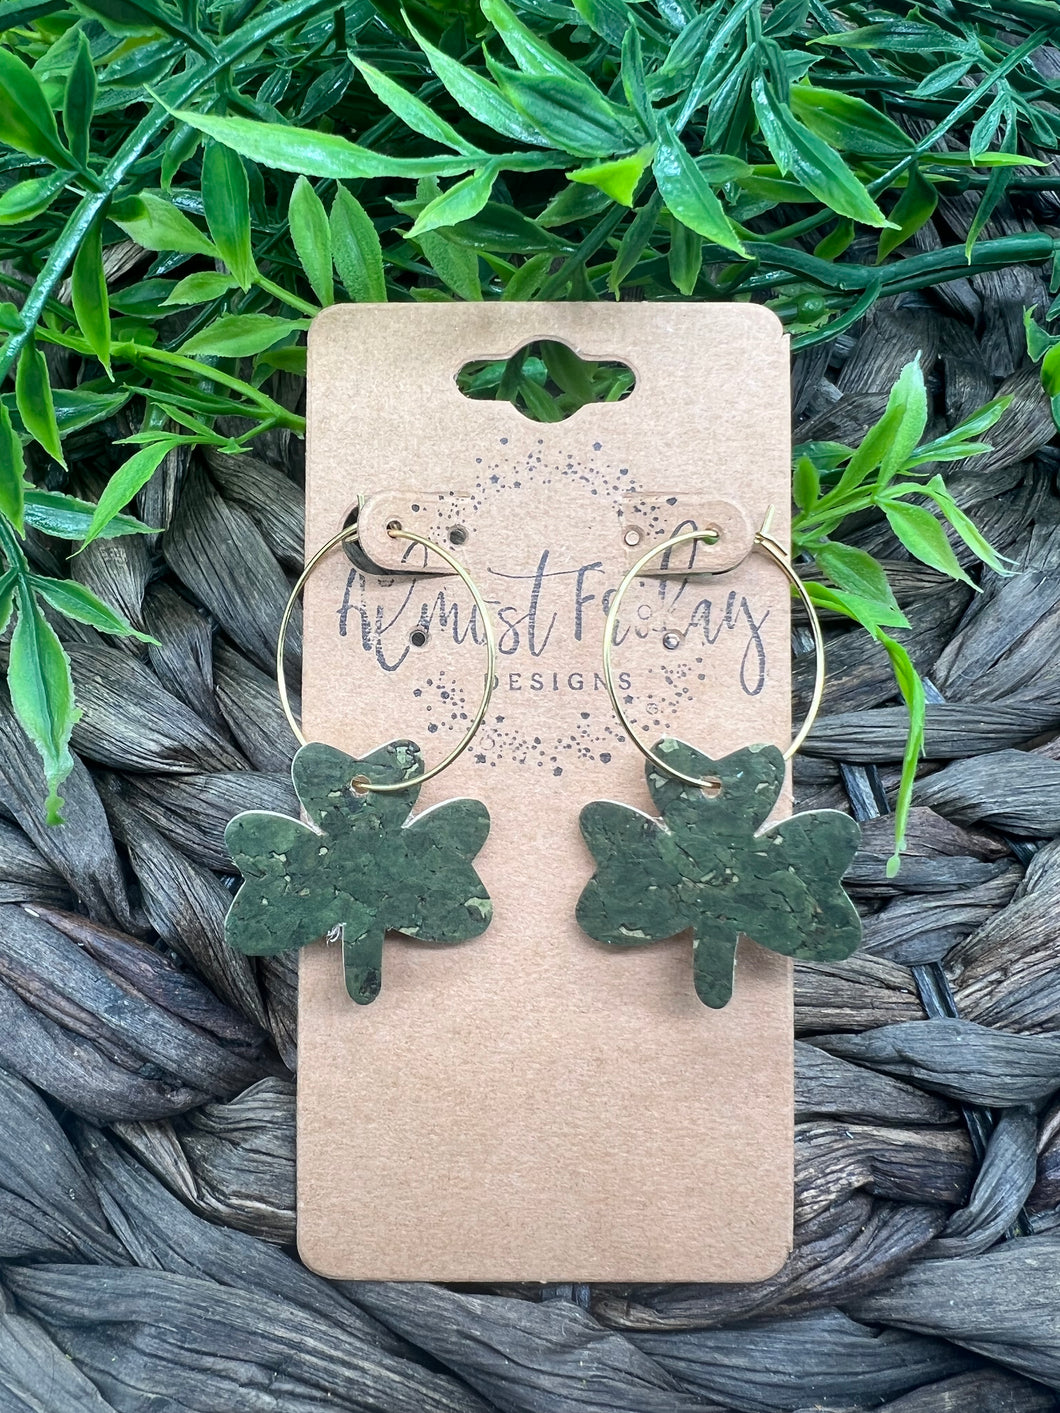 Genuine Leather Earrings - Saint Patrick's Day - Green Earrings - Gold - Green - Hoop Earrings - Three Leaf Clovers - Clovers - Shamrocks - Statement Earrings